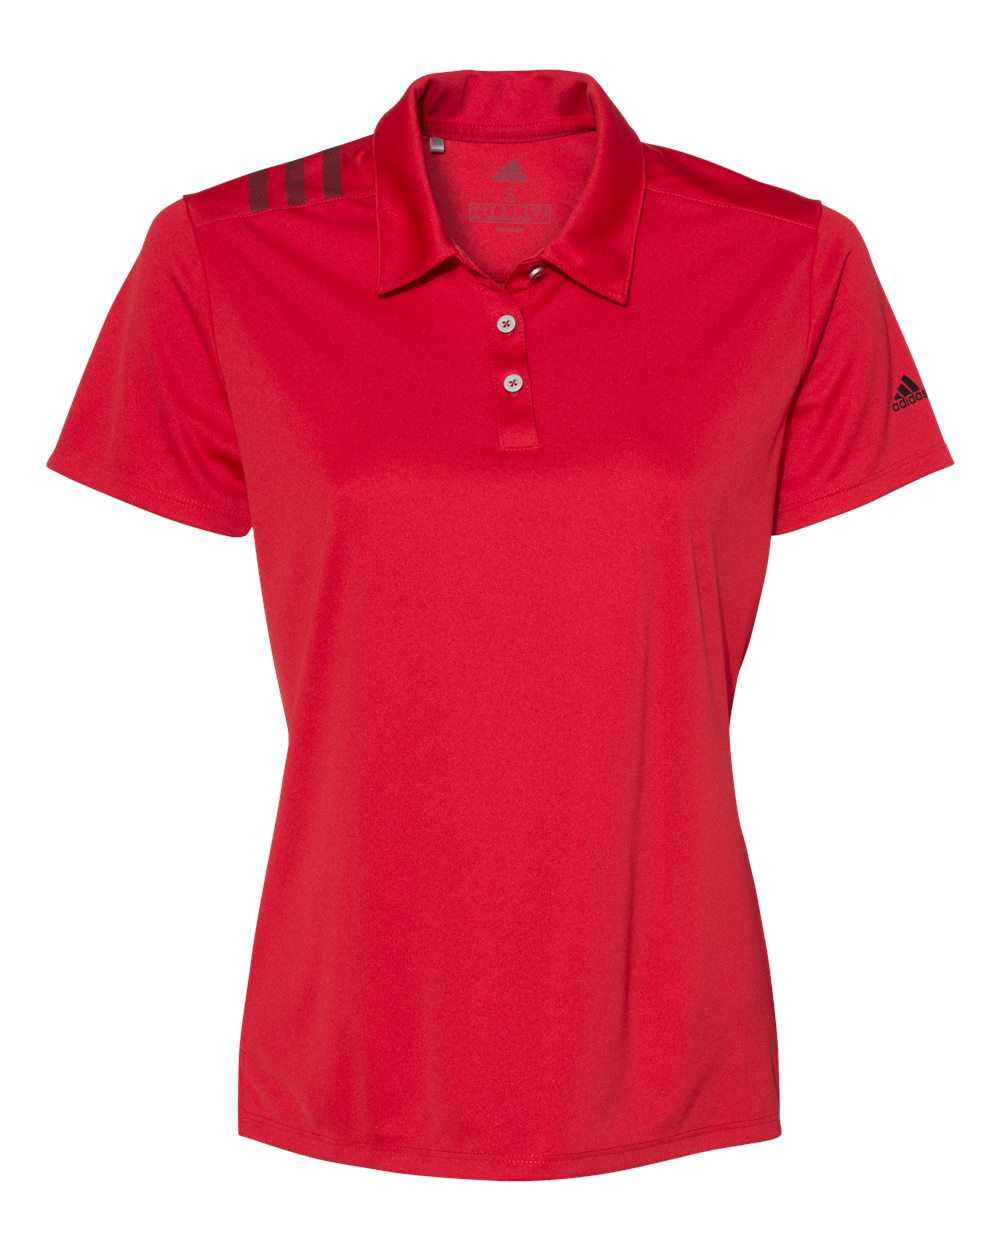 Adidas A325 Women's 3-Stripes Shoulder Sport Shirt - Collegiate Red Black - HIT a Double